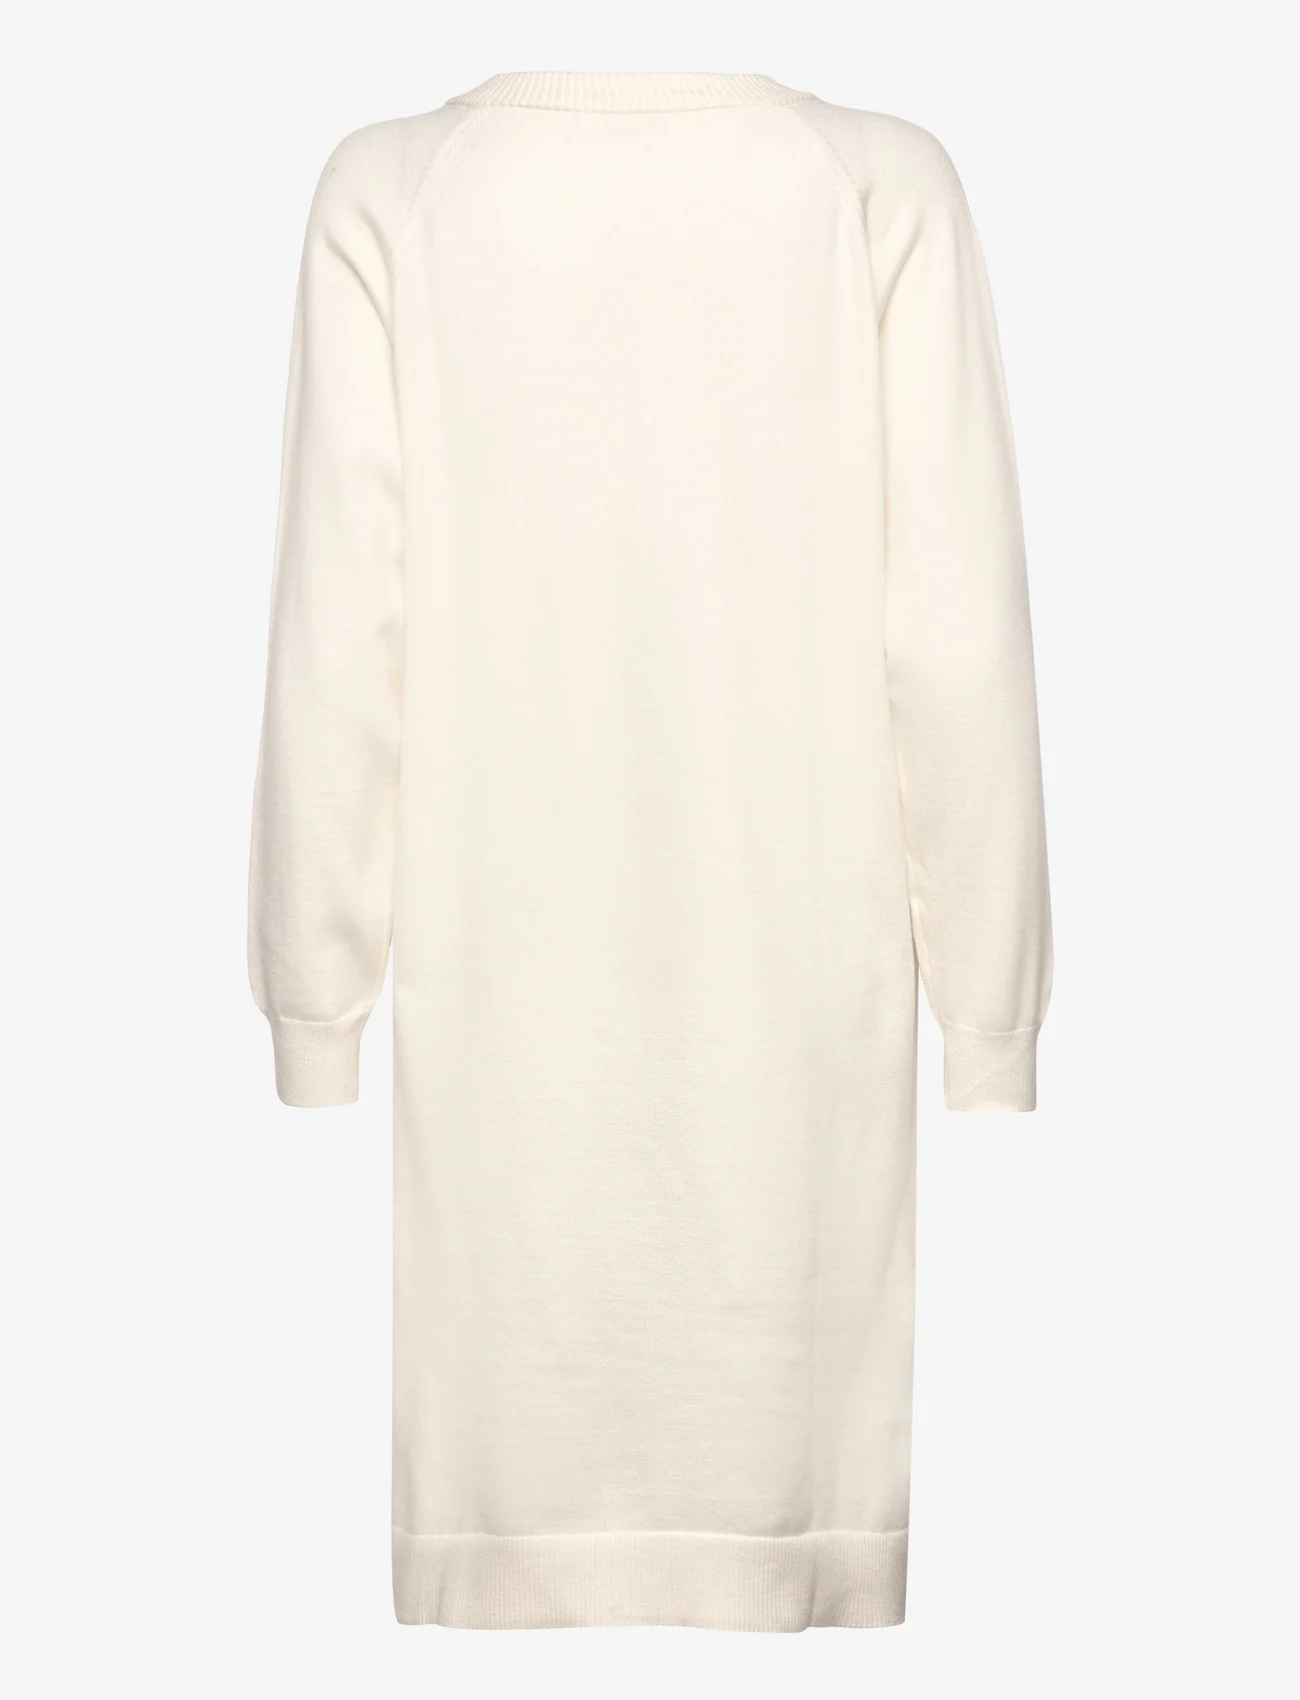 Coster Copenhagen - CC Heart CLARE comfy knit dress - adītas kleitas - off-white - 1